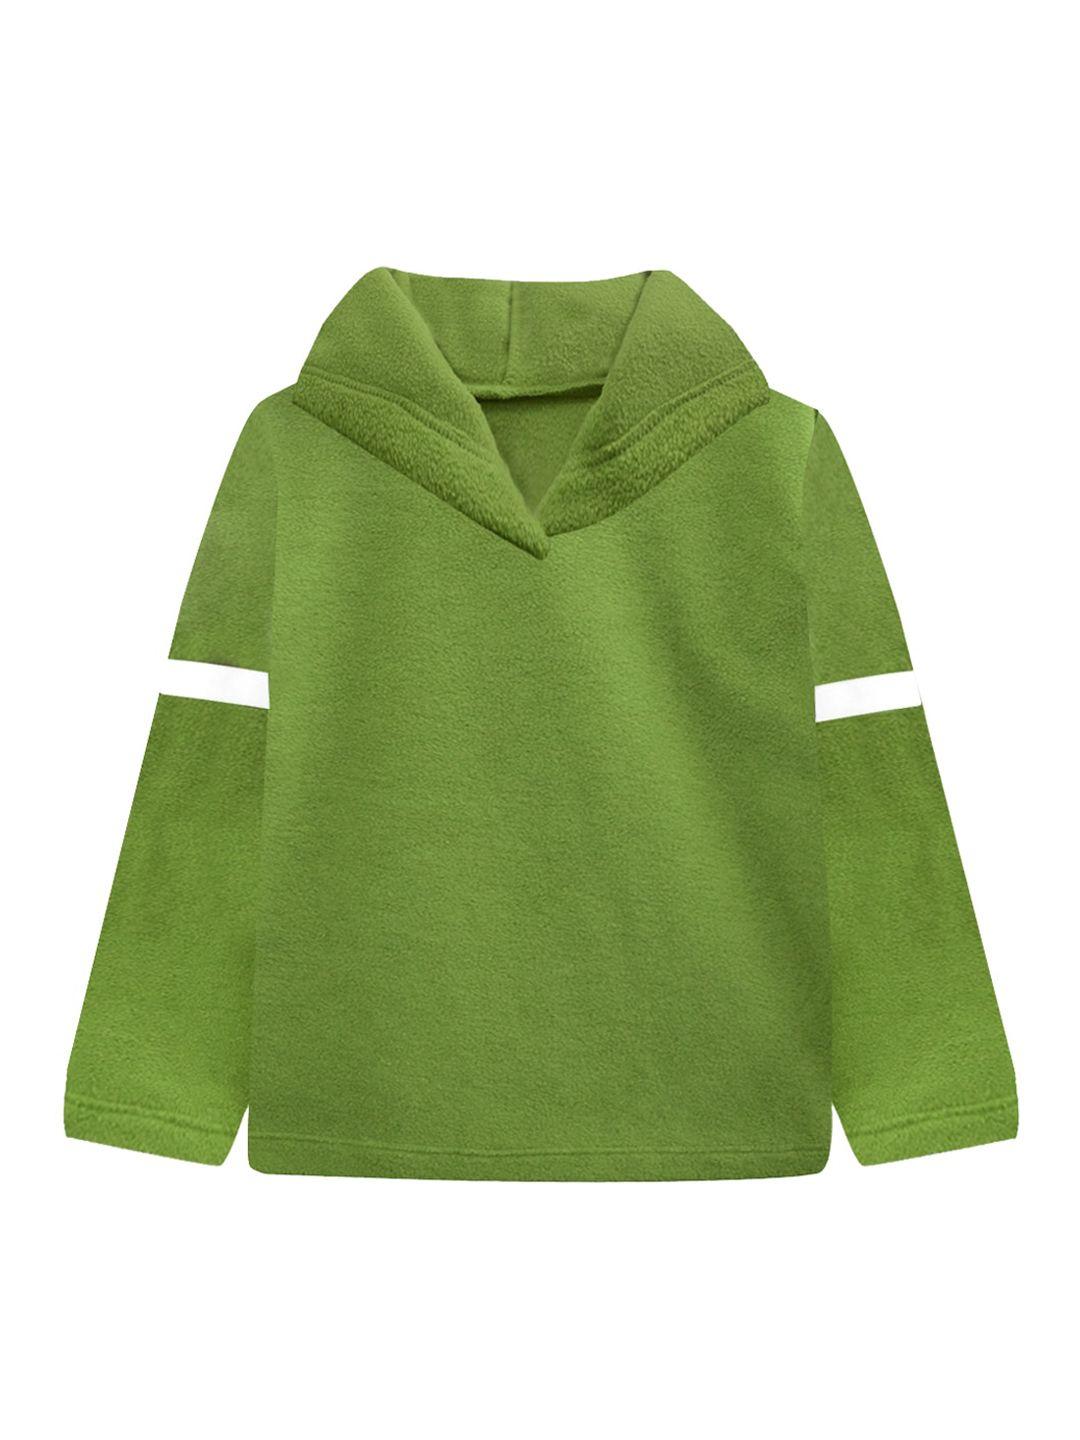 a t u n boys olive green hooded sweatshirt